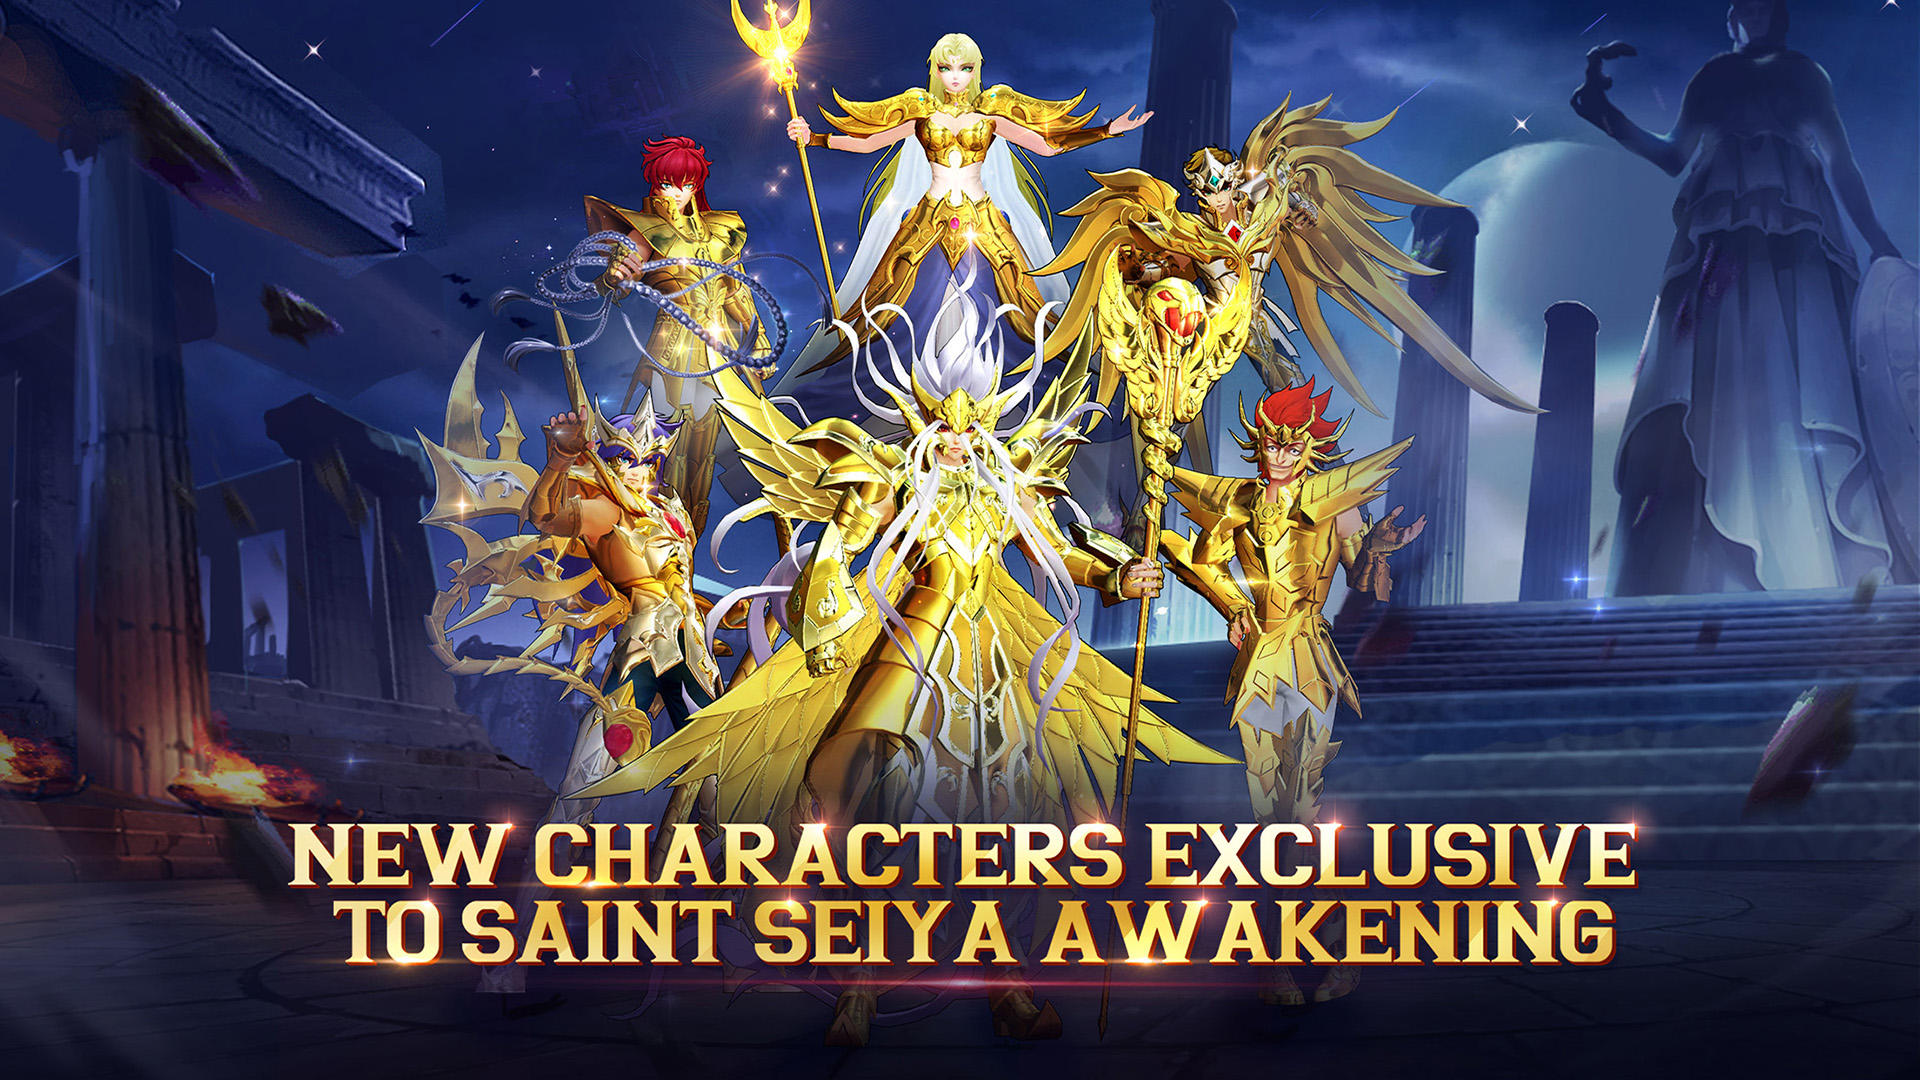 10 Strongest Saint Seiya Villains, Ranked